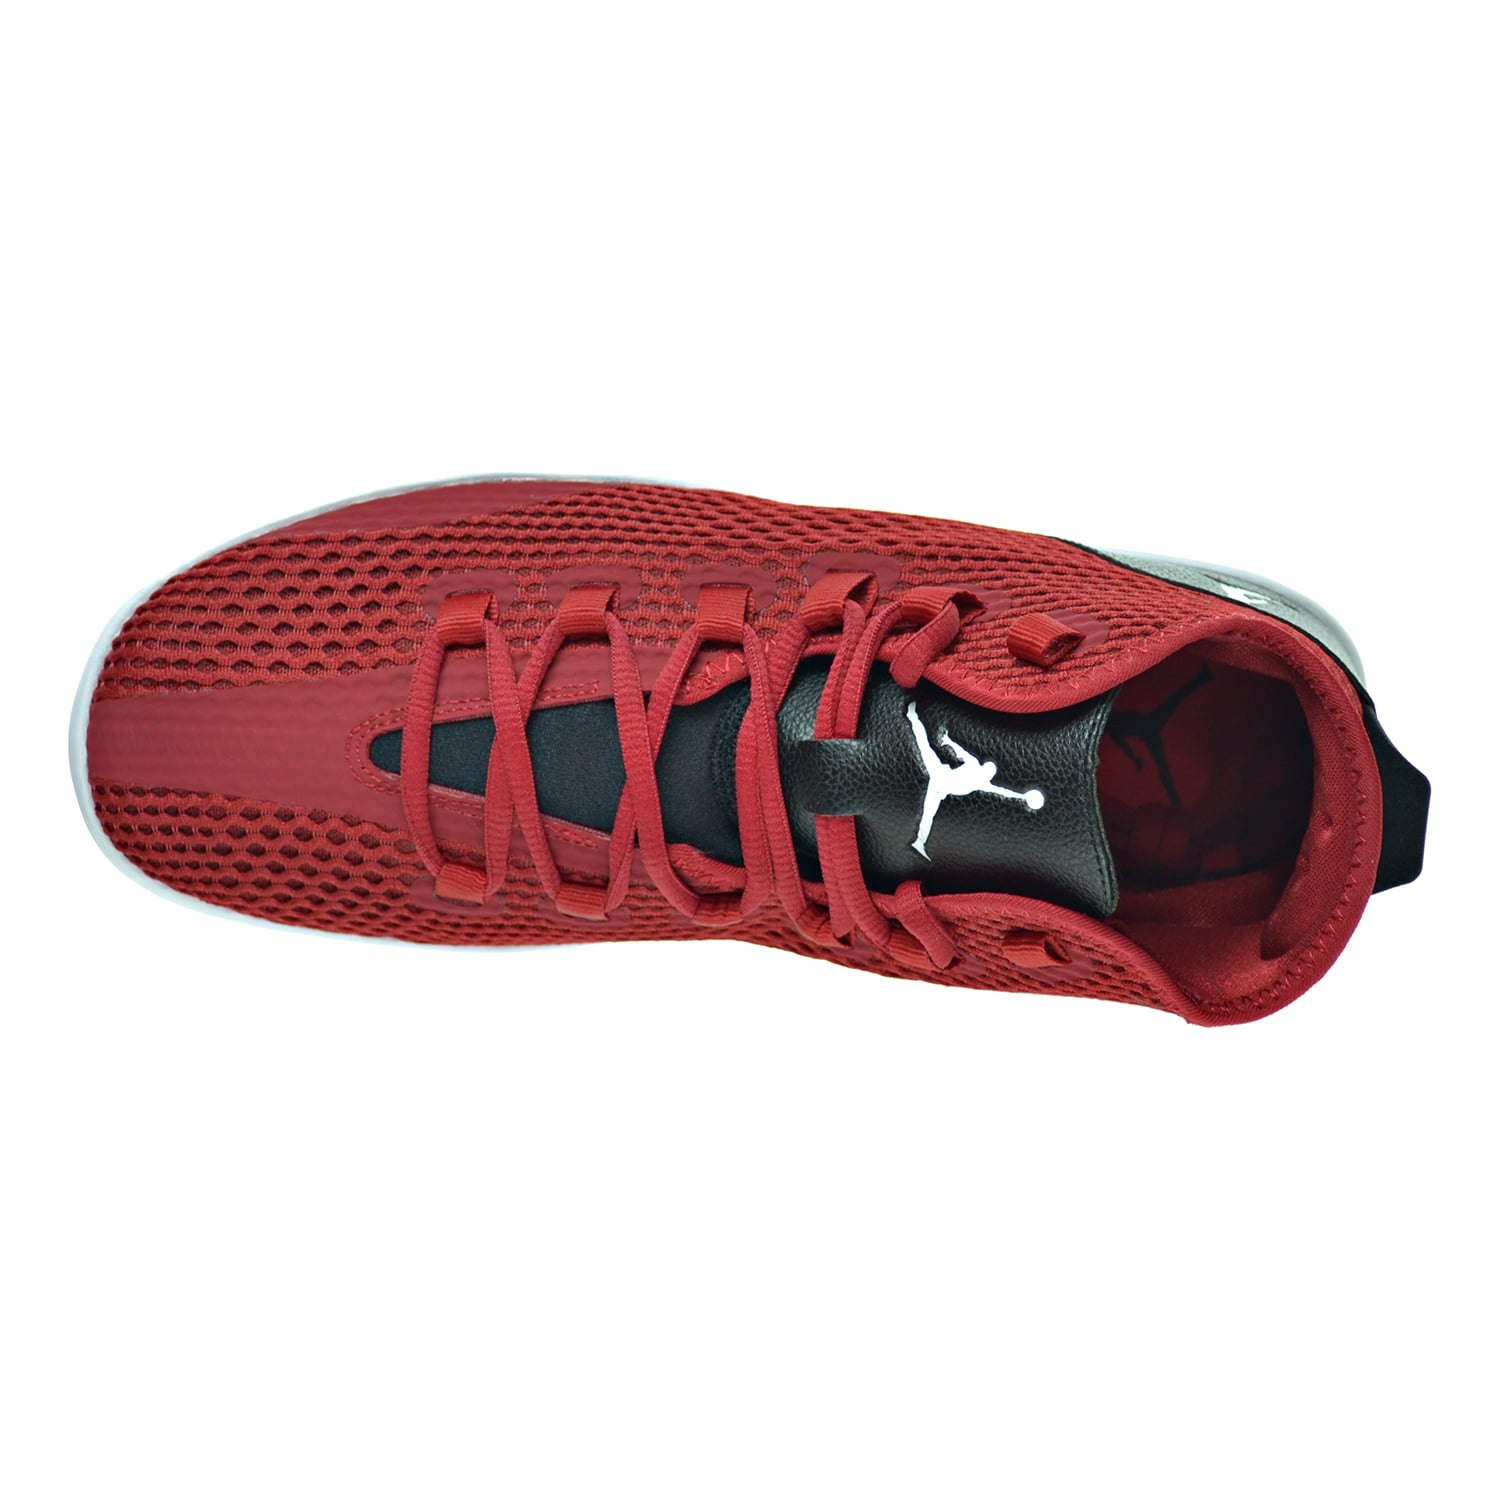 Jordan Shoes Mens 11.5 Reveal Sneakers Black Round Toe Lace Up 834064 605